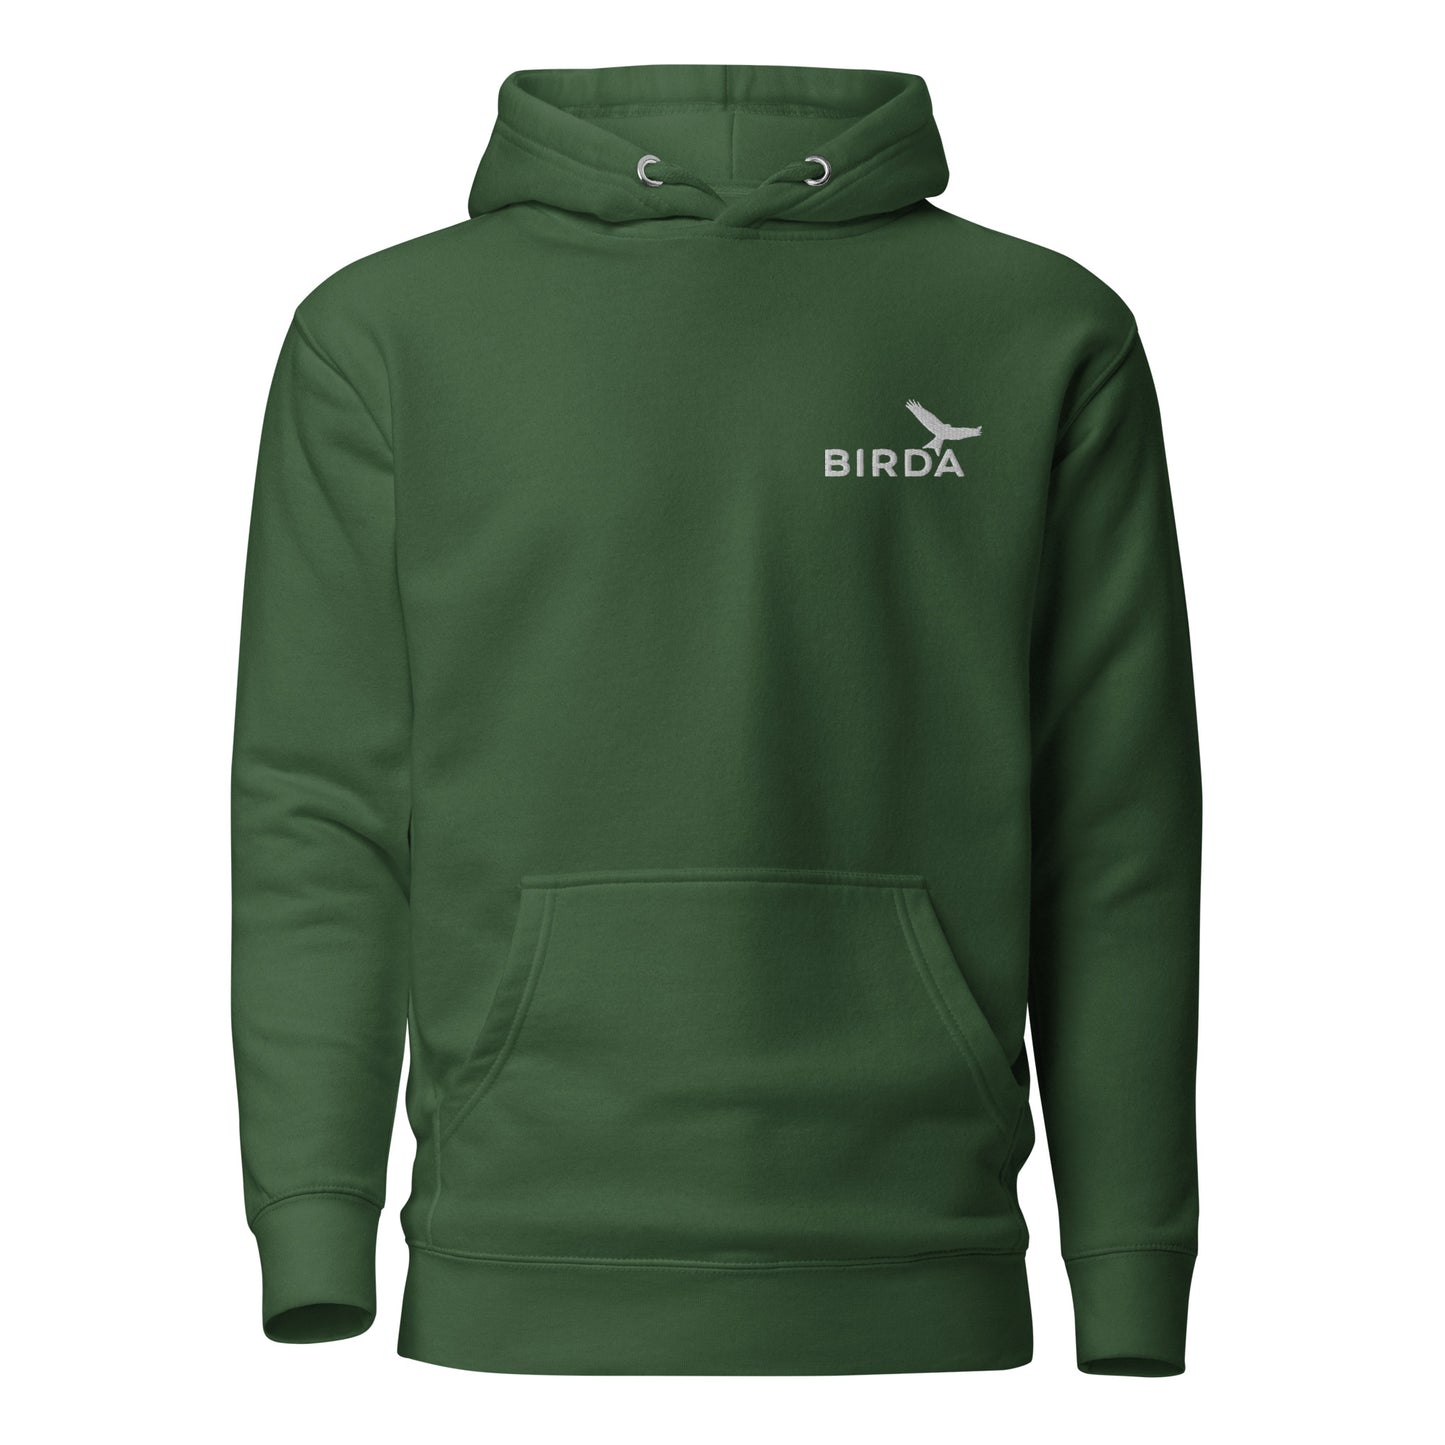 Birda bird premium hoodie - green